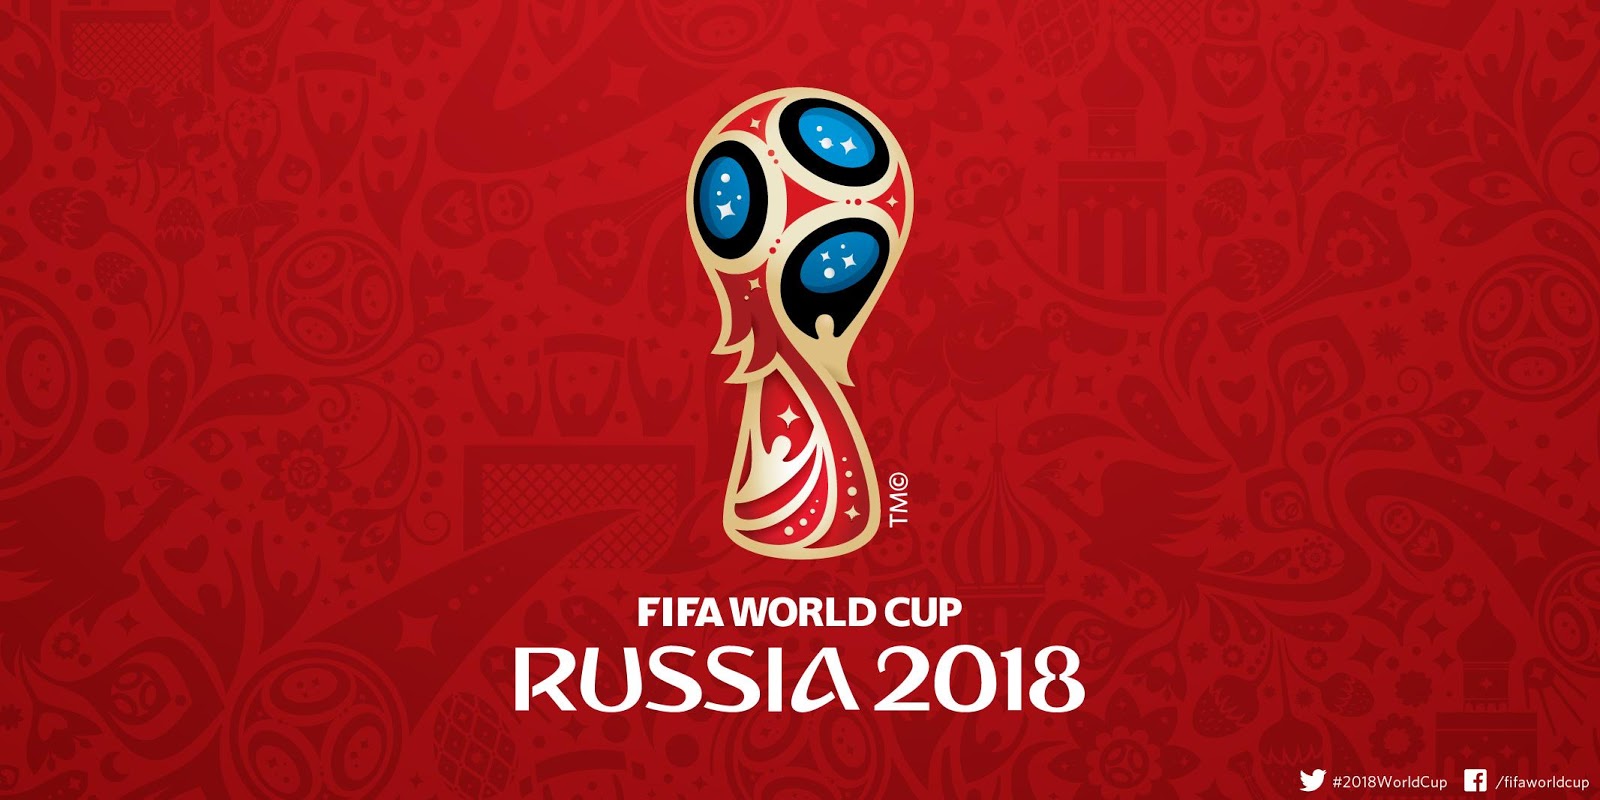 2017/10/Fifa-world-cup-Russia-2018-logo.jpg